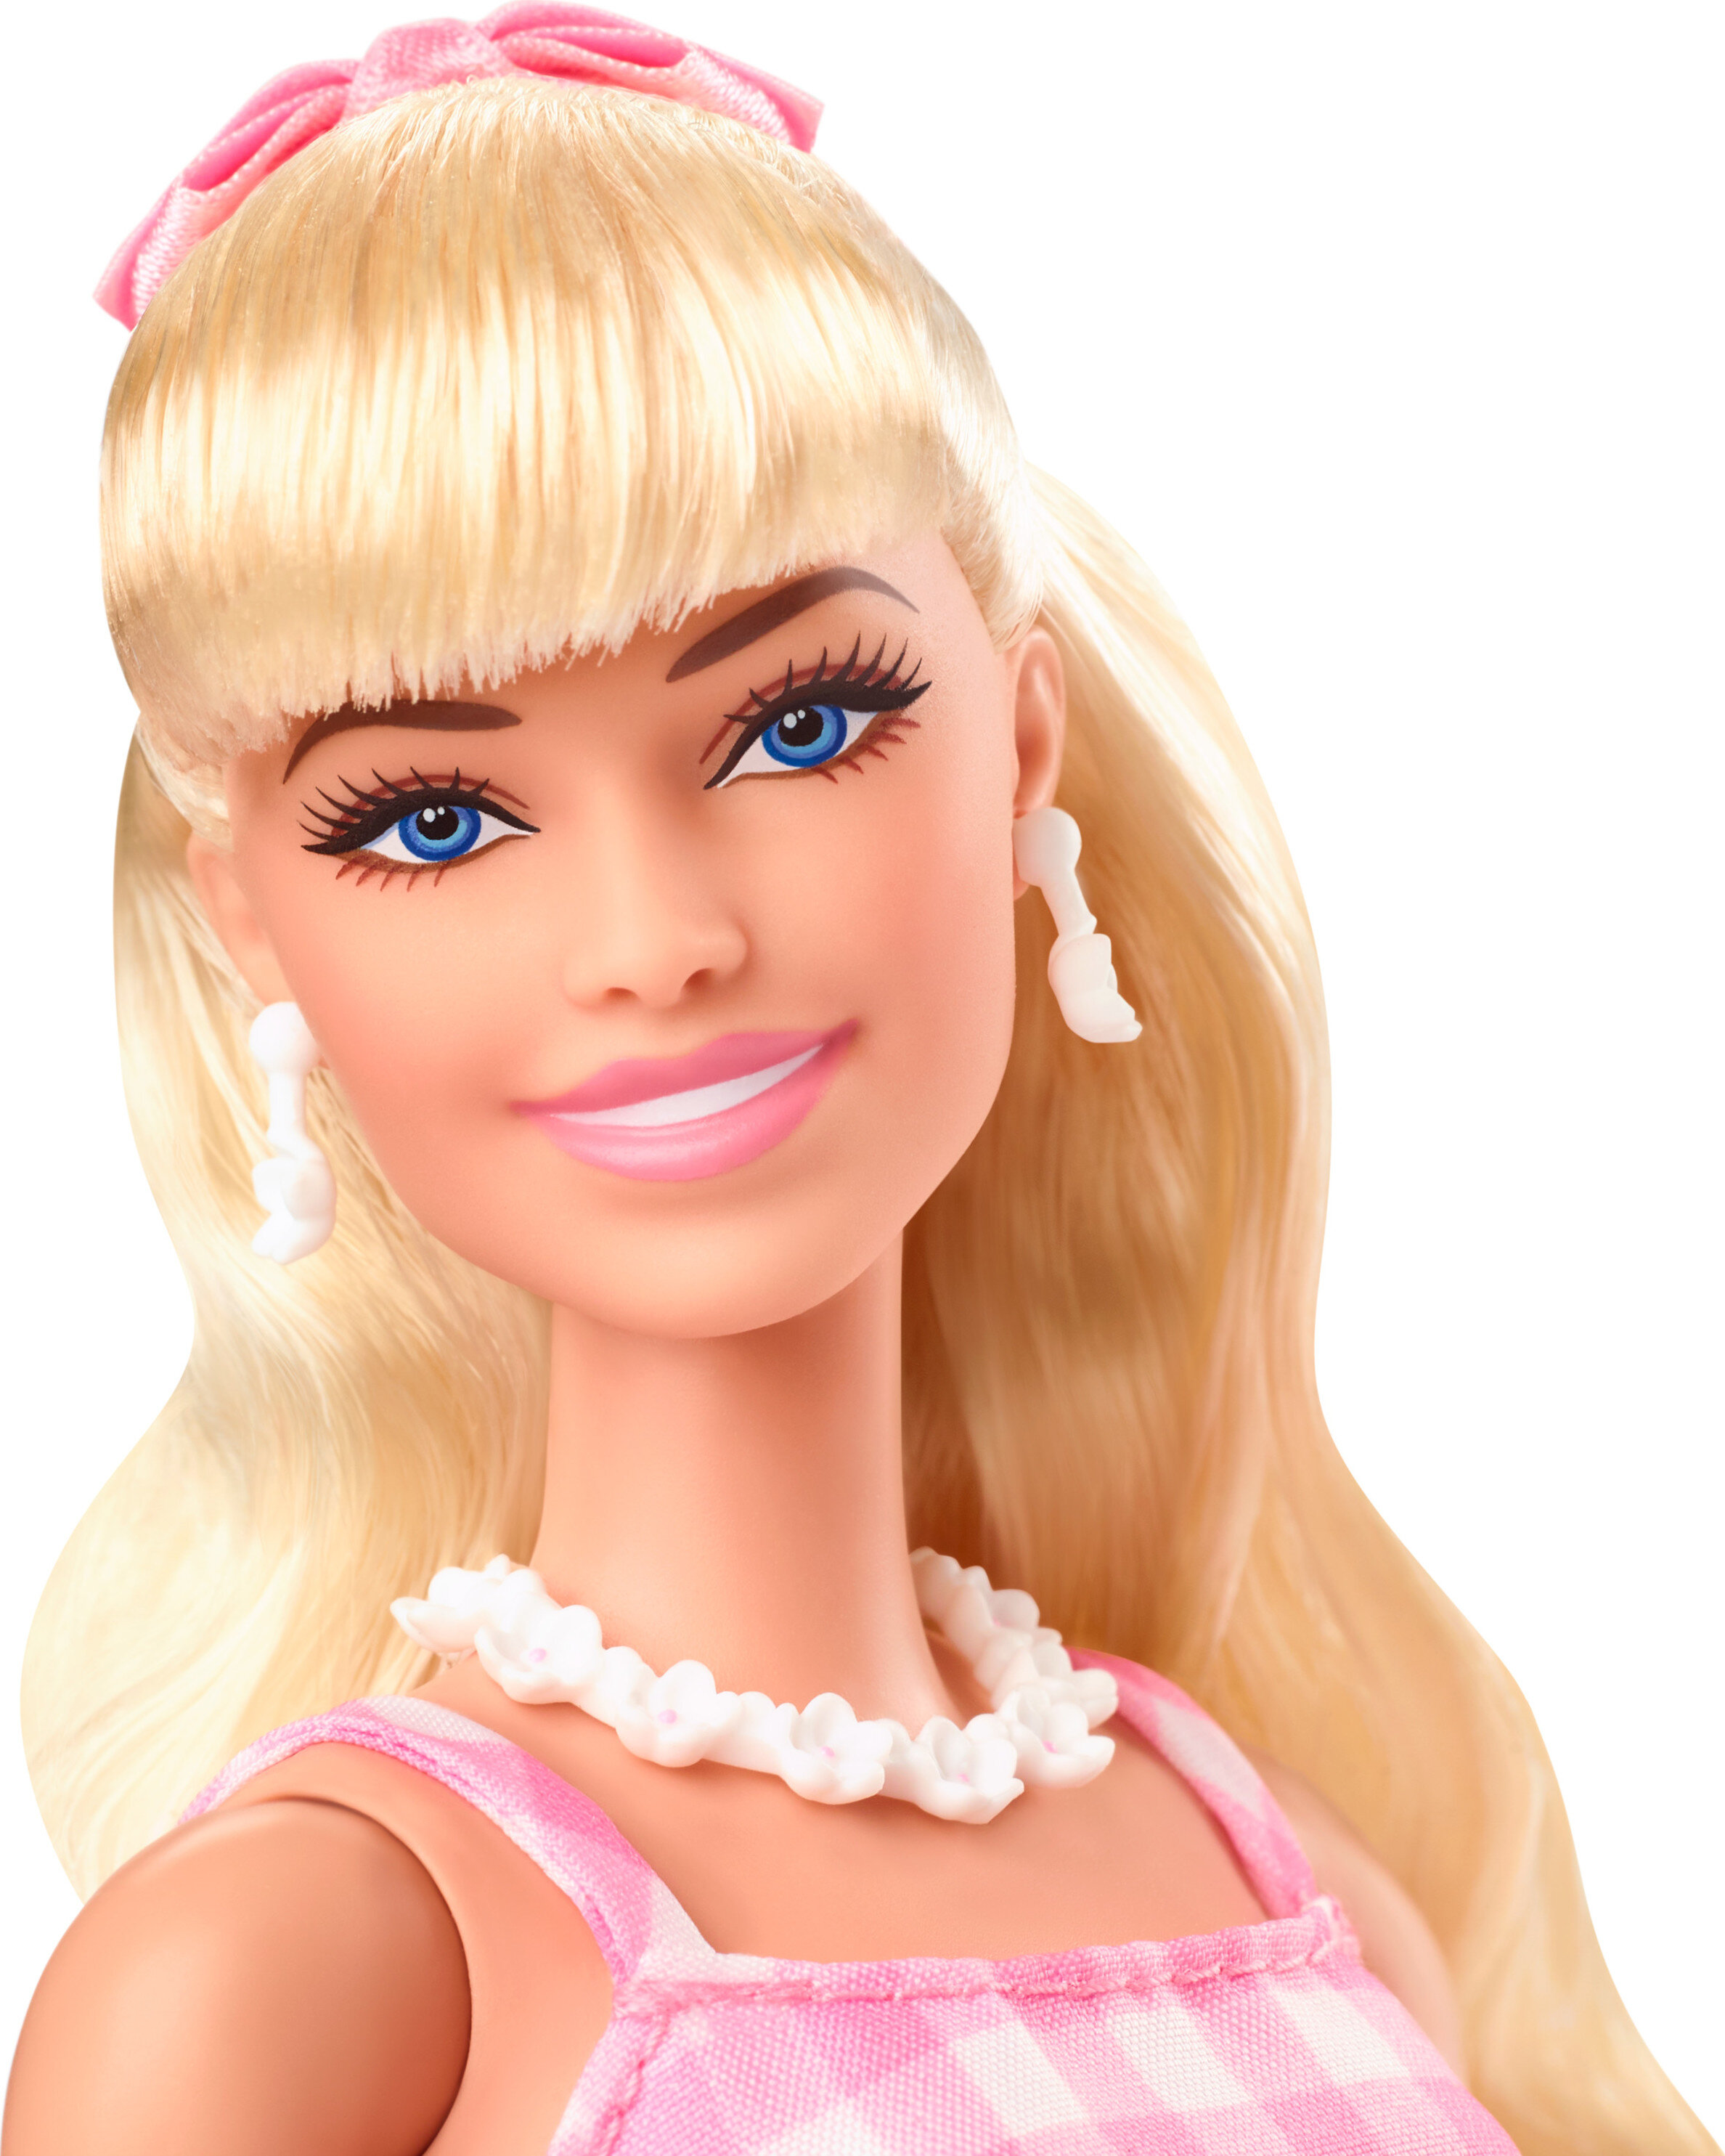 Barbie The Movie Barbie Doll - Pink Gingham Dress